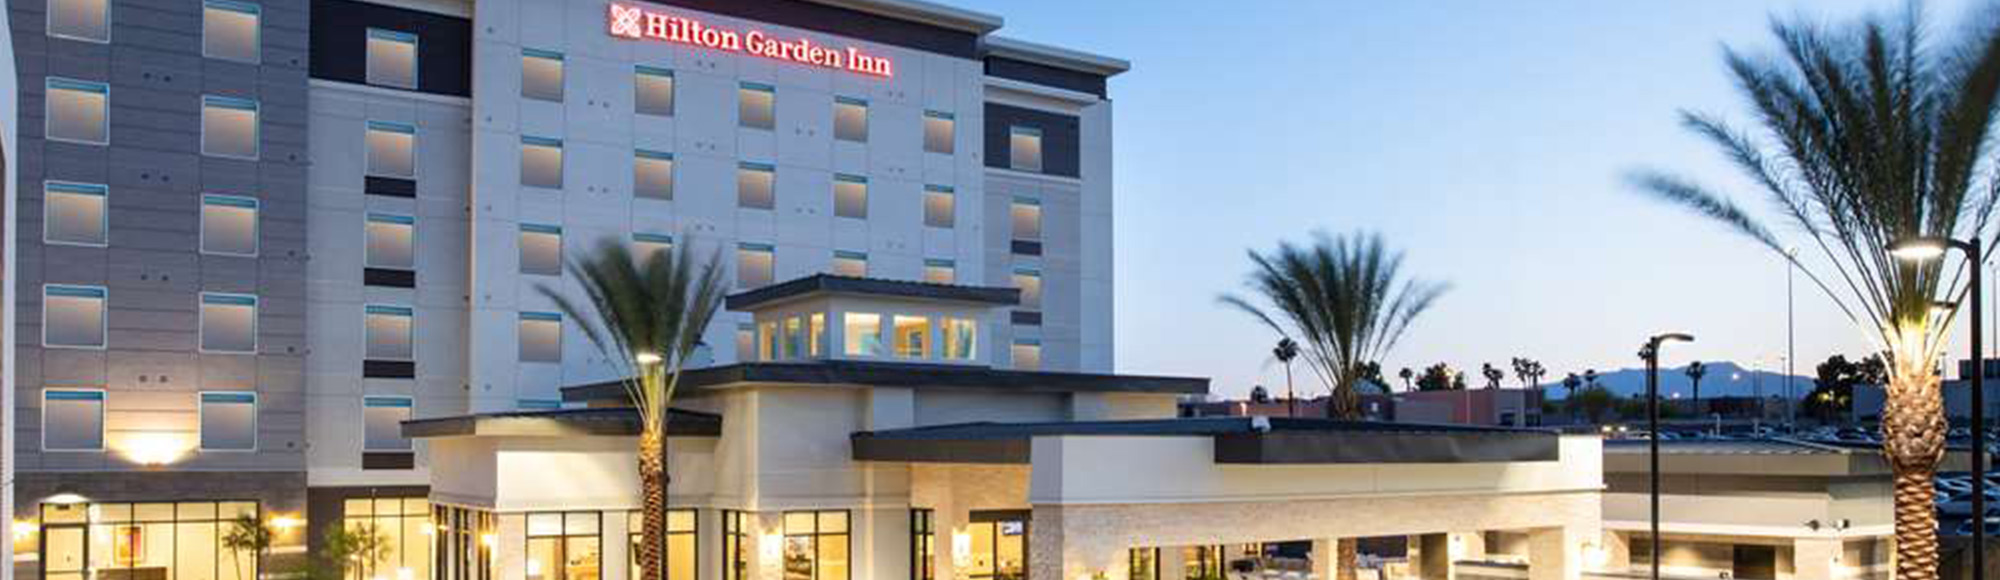 Hilton Garden Inn Las Vegas City Center Hotel Lasvegas Com